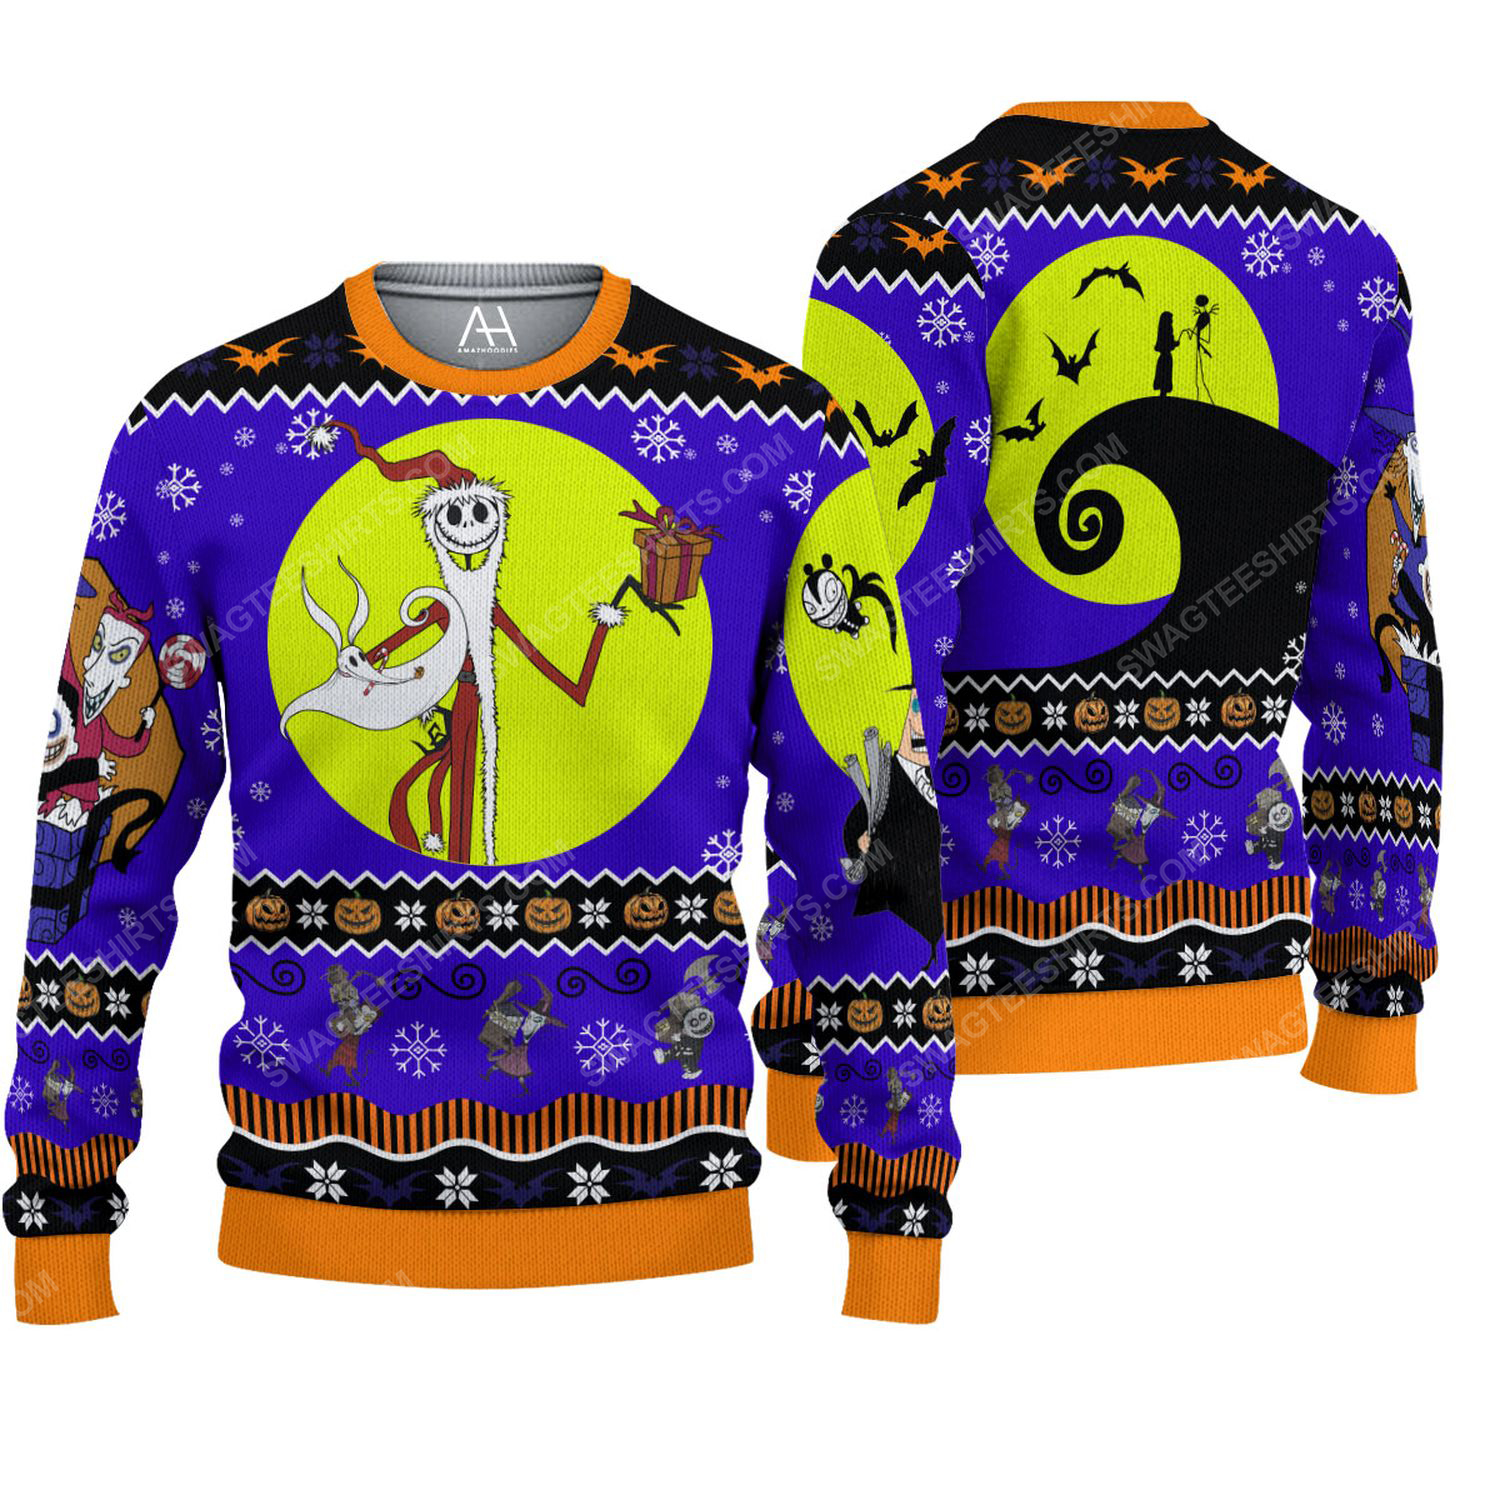 Jack skellington santa claus ugly christmas sweater 1 - Copy (3)